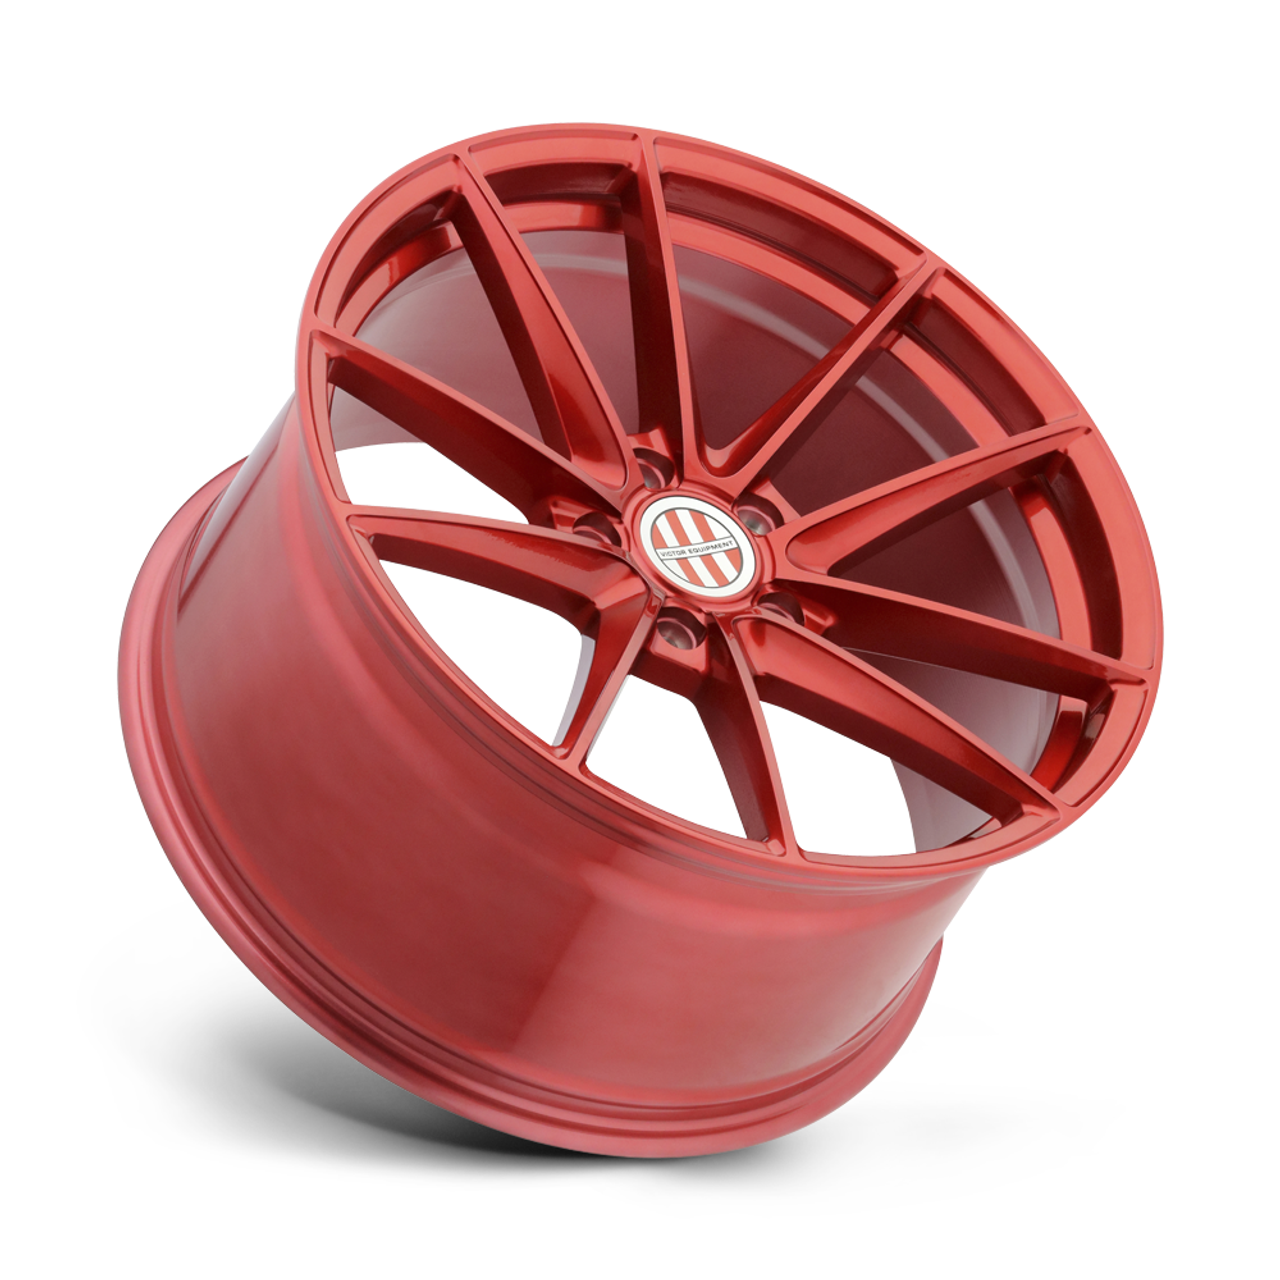 Victor Equipment Zuffen 21x10.5 5x130 Candy Red Wheel 21" 56mm Rim